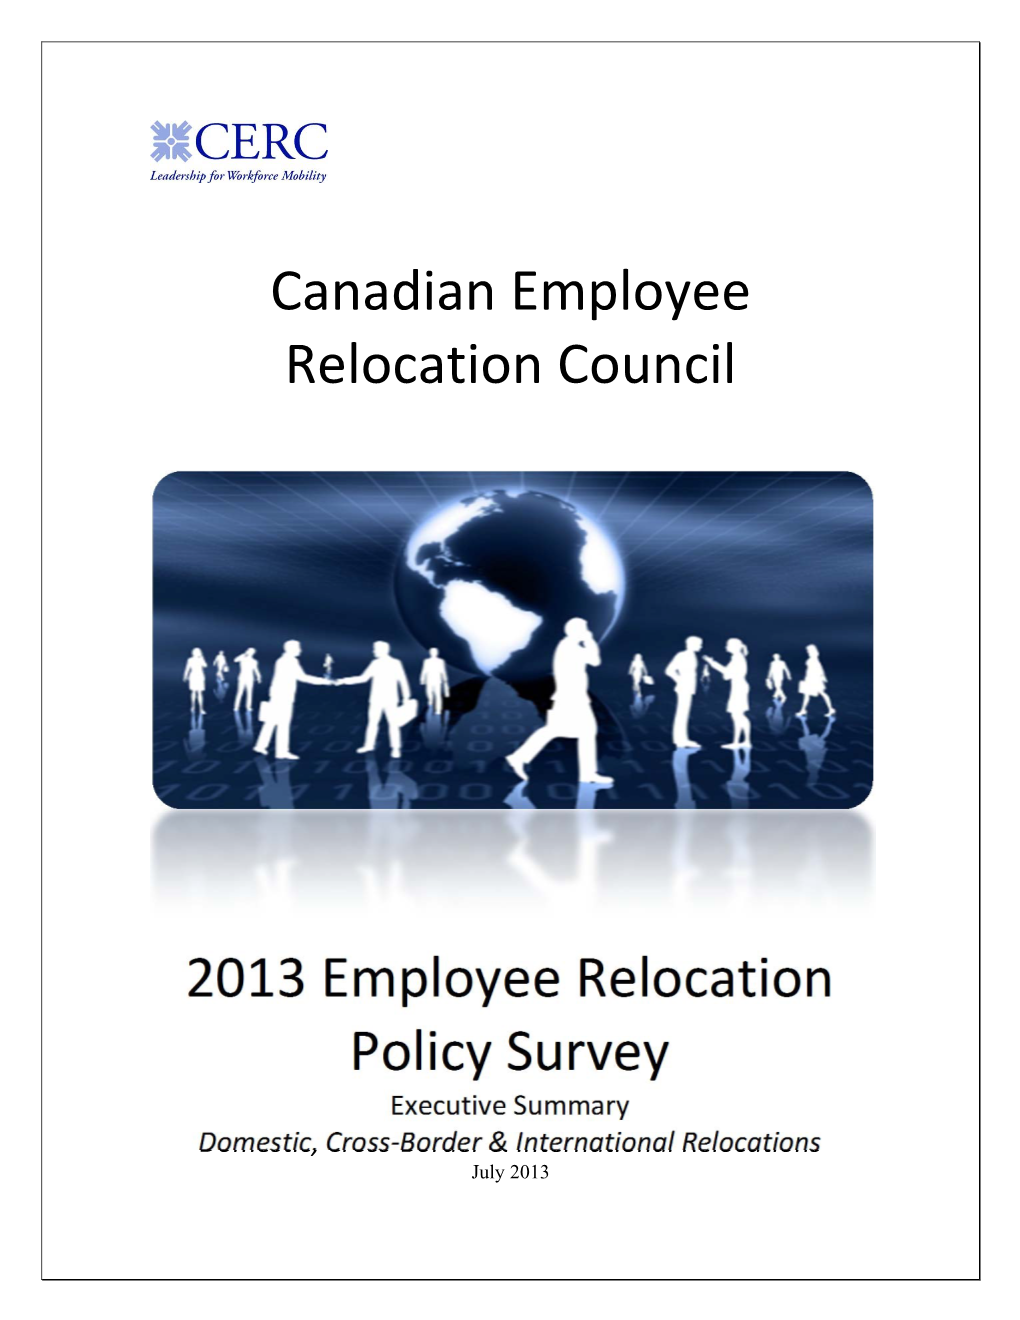 2013 Employee Relocation Policy Survey Executive Summary